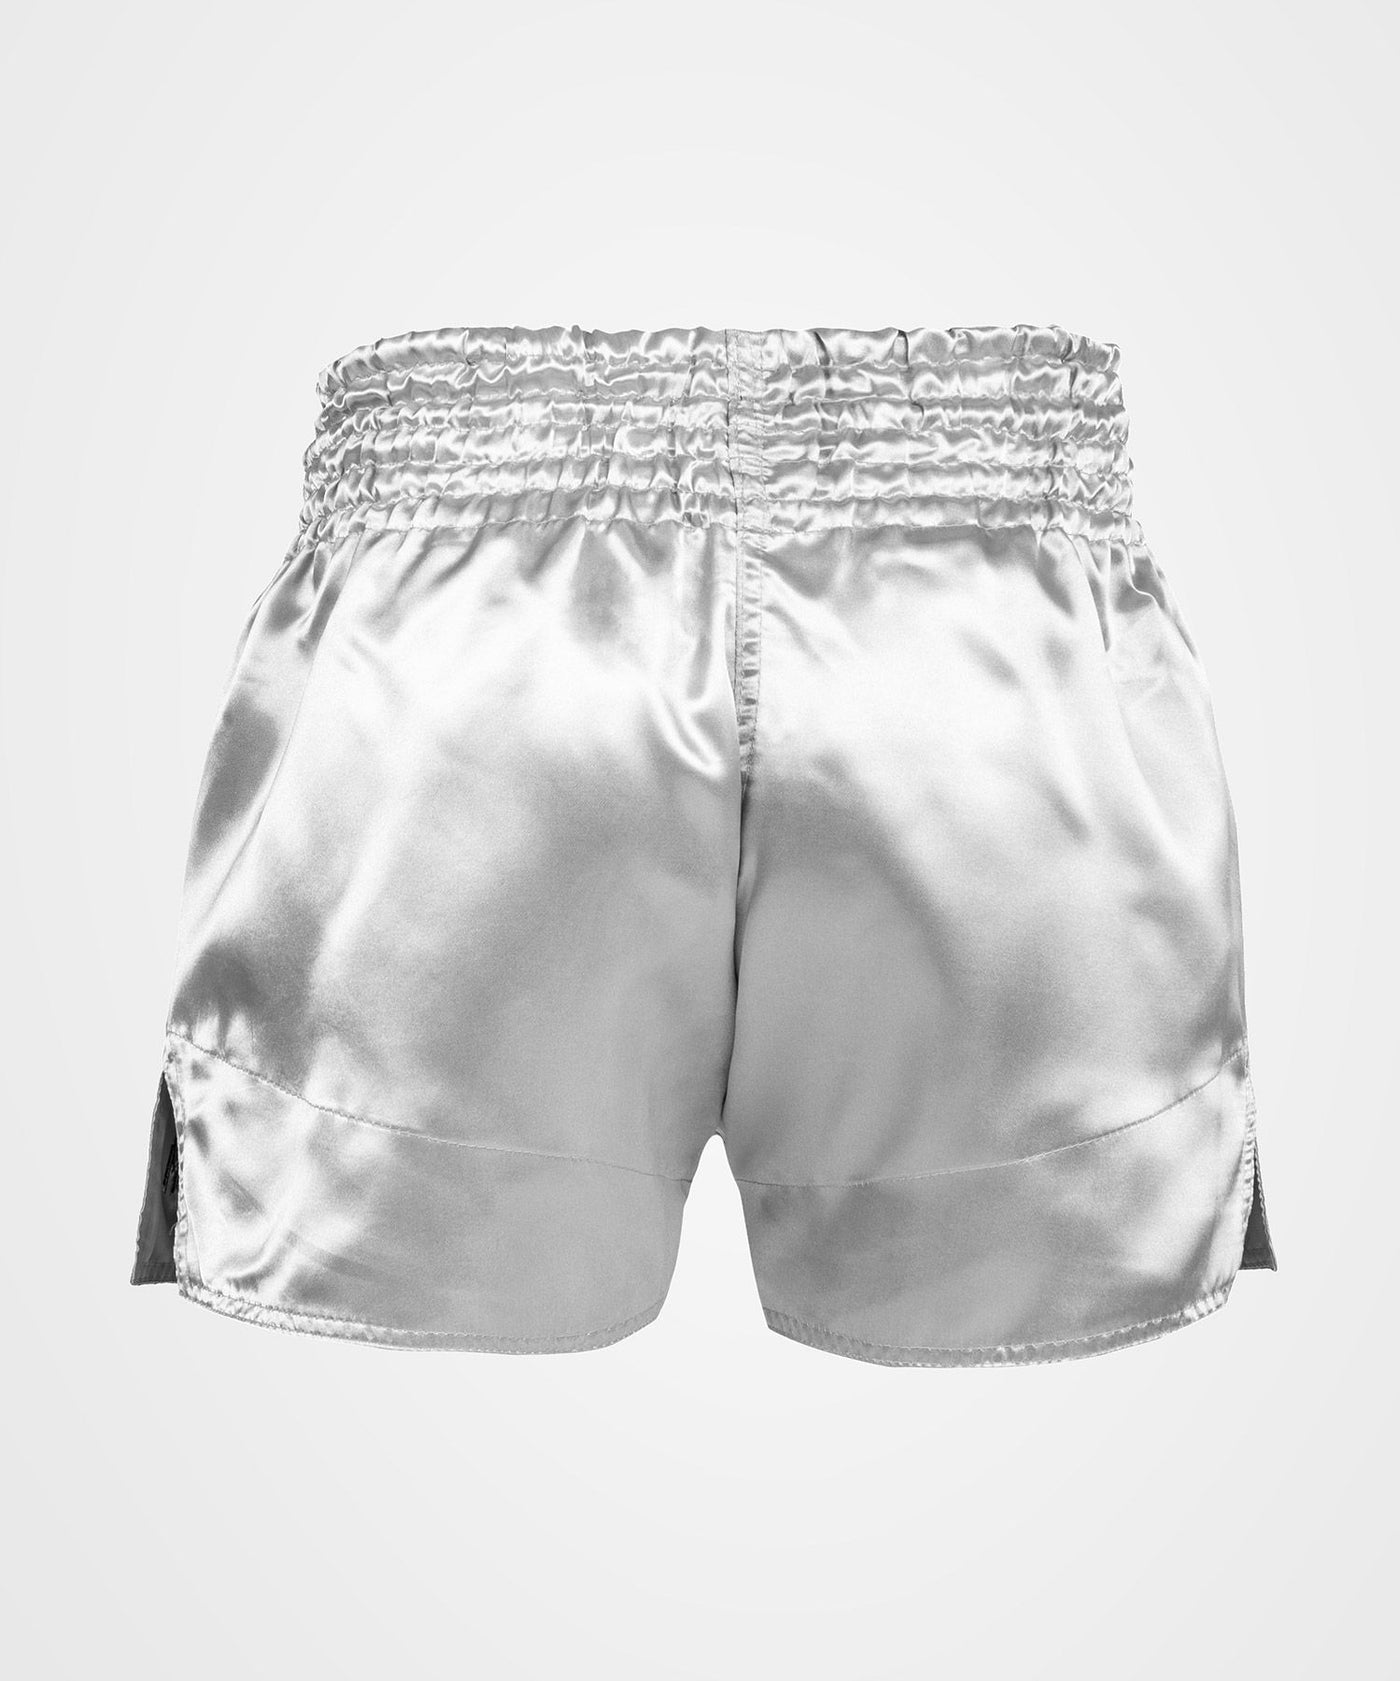 מכנסי איגרוף תאילנדי  Venum Classic Muay Thai Shorts Silver/Black L